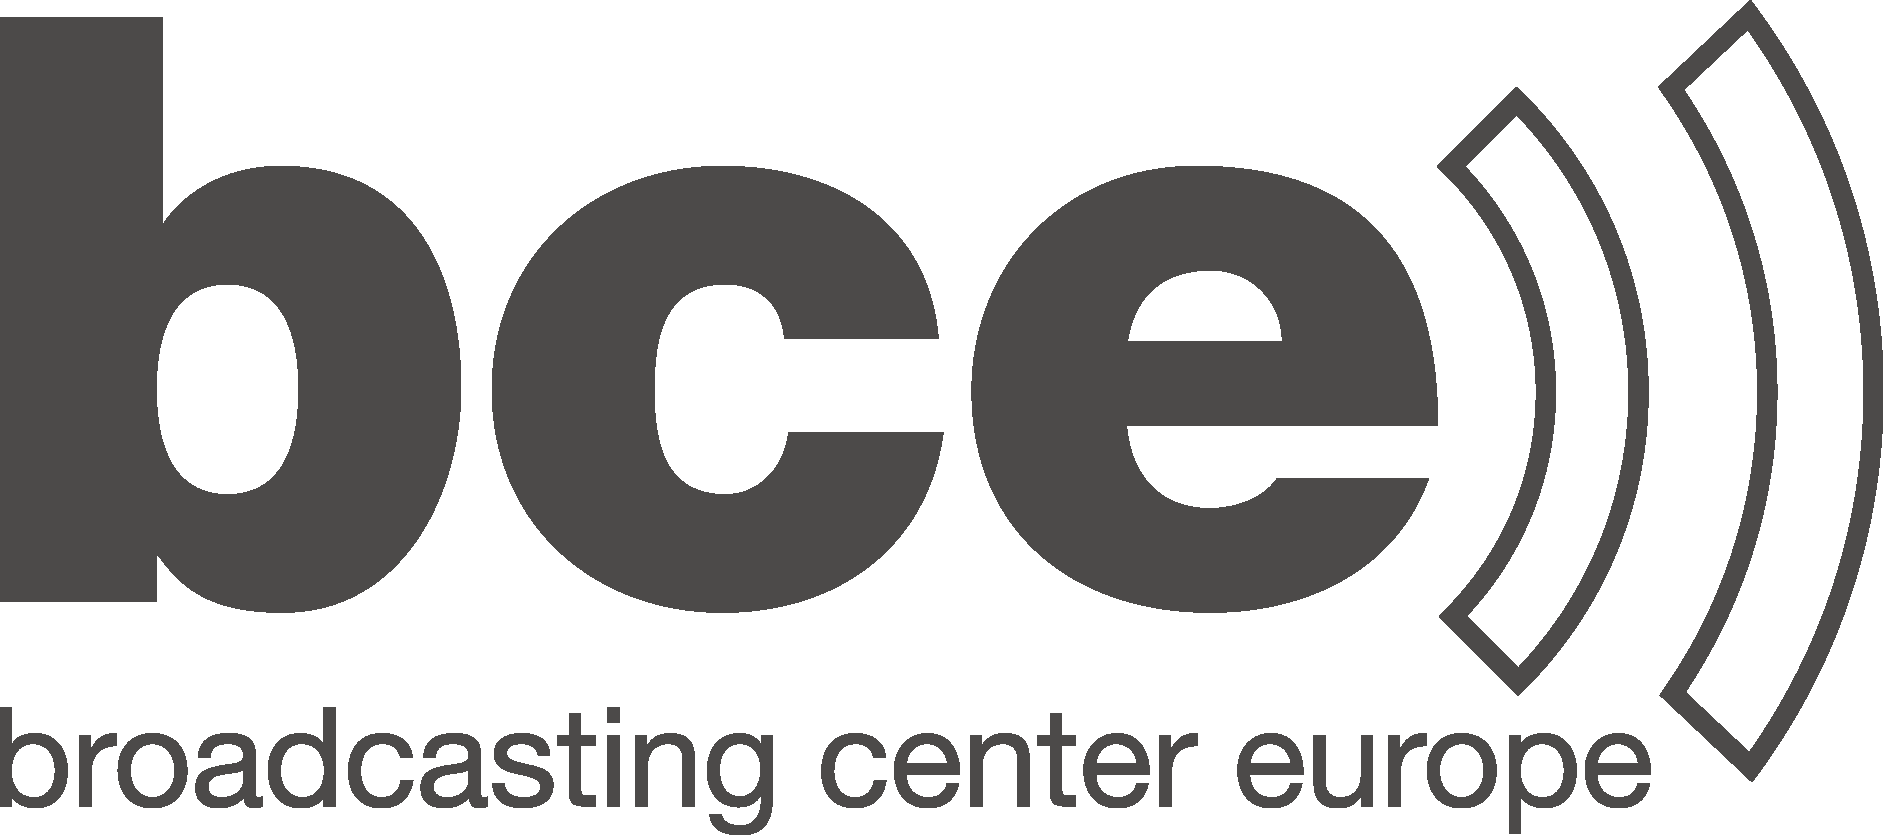 Broadcasting Center Europe Logo Vector